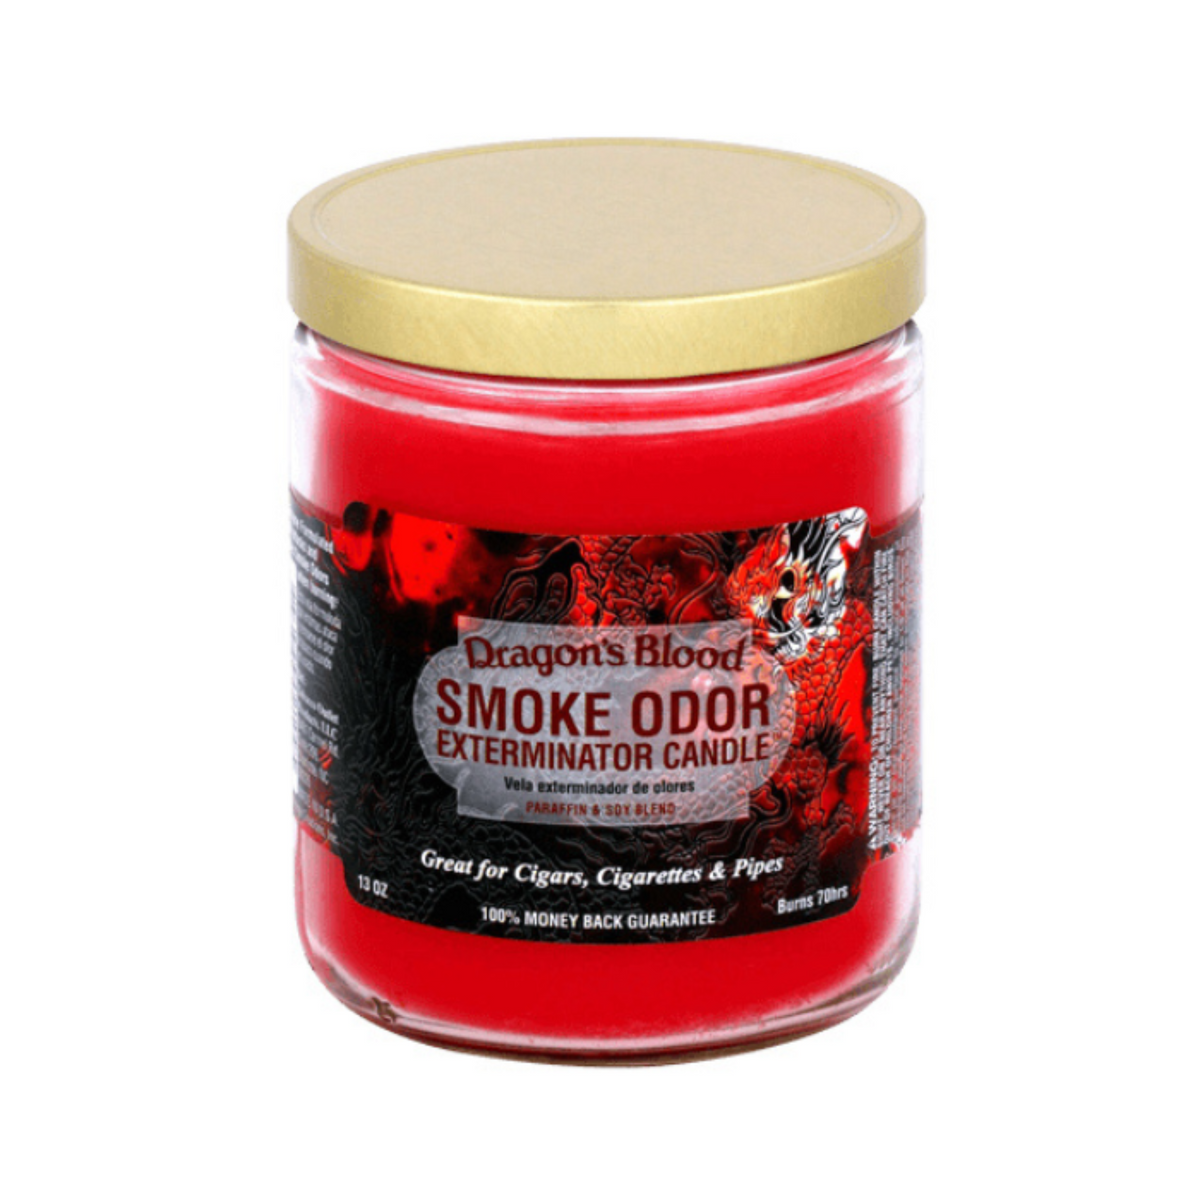 Smoke Odor Exterminator Candle - DRAGON'S BLOOD